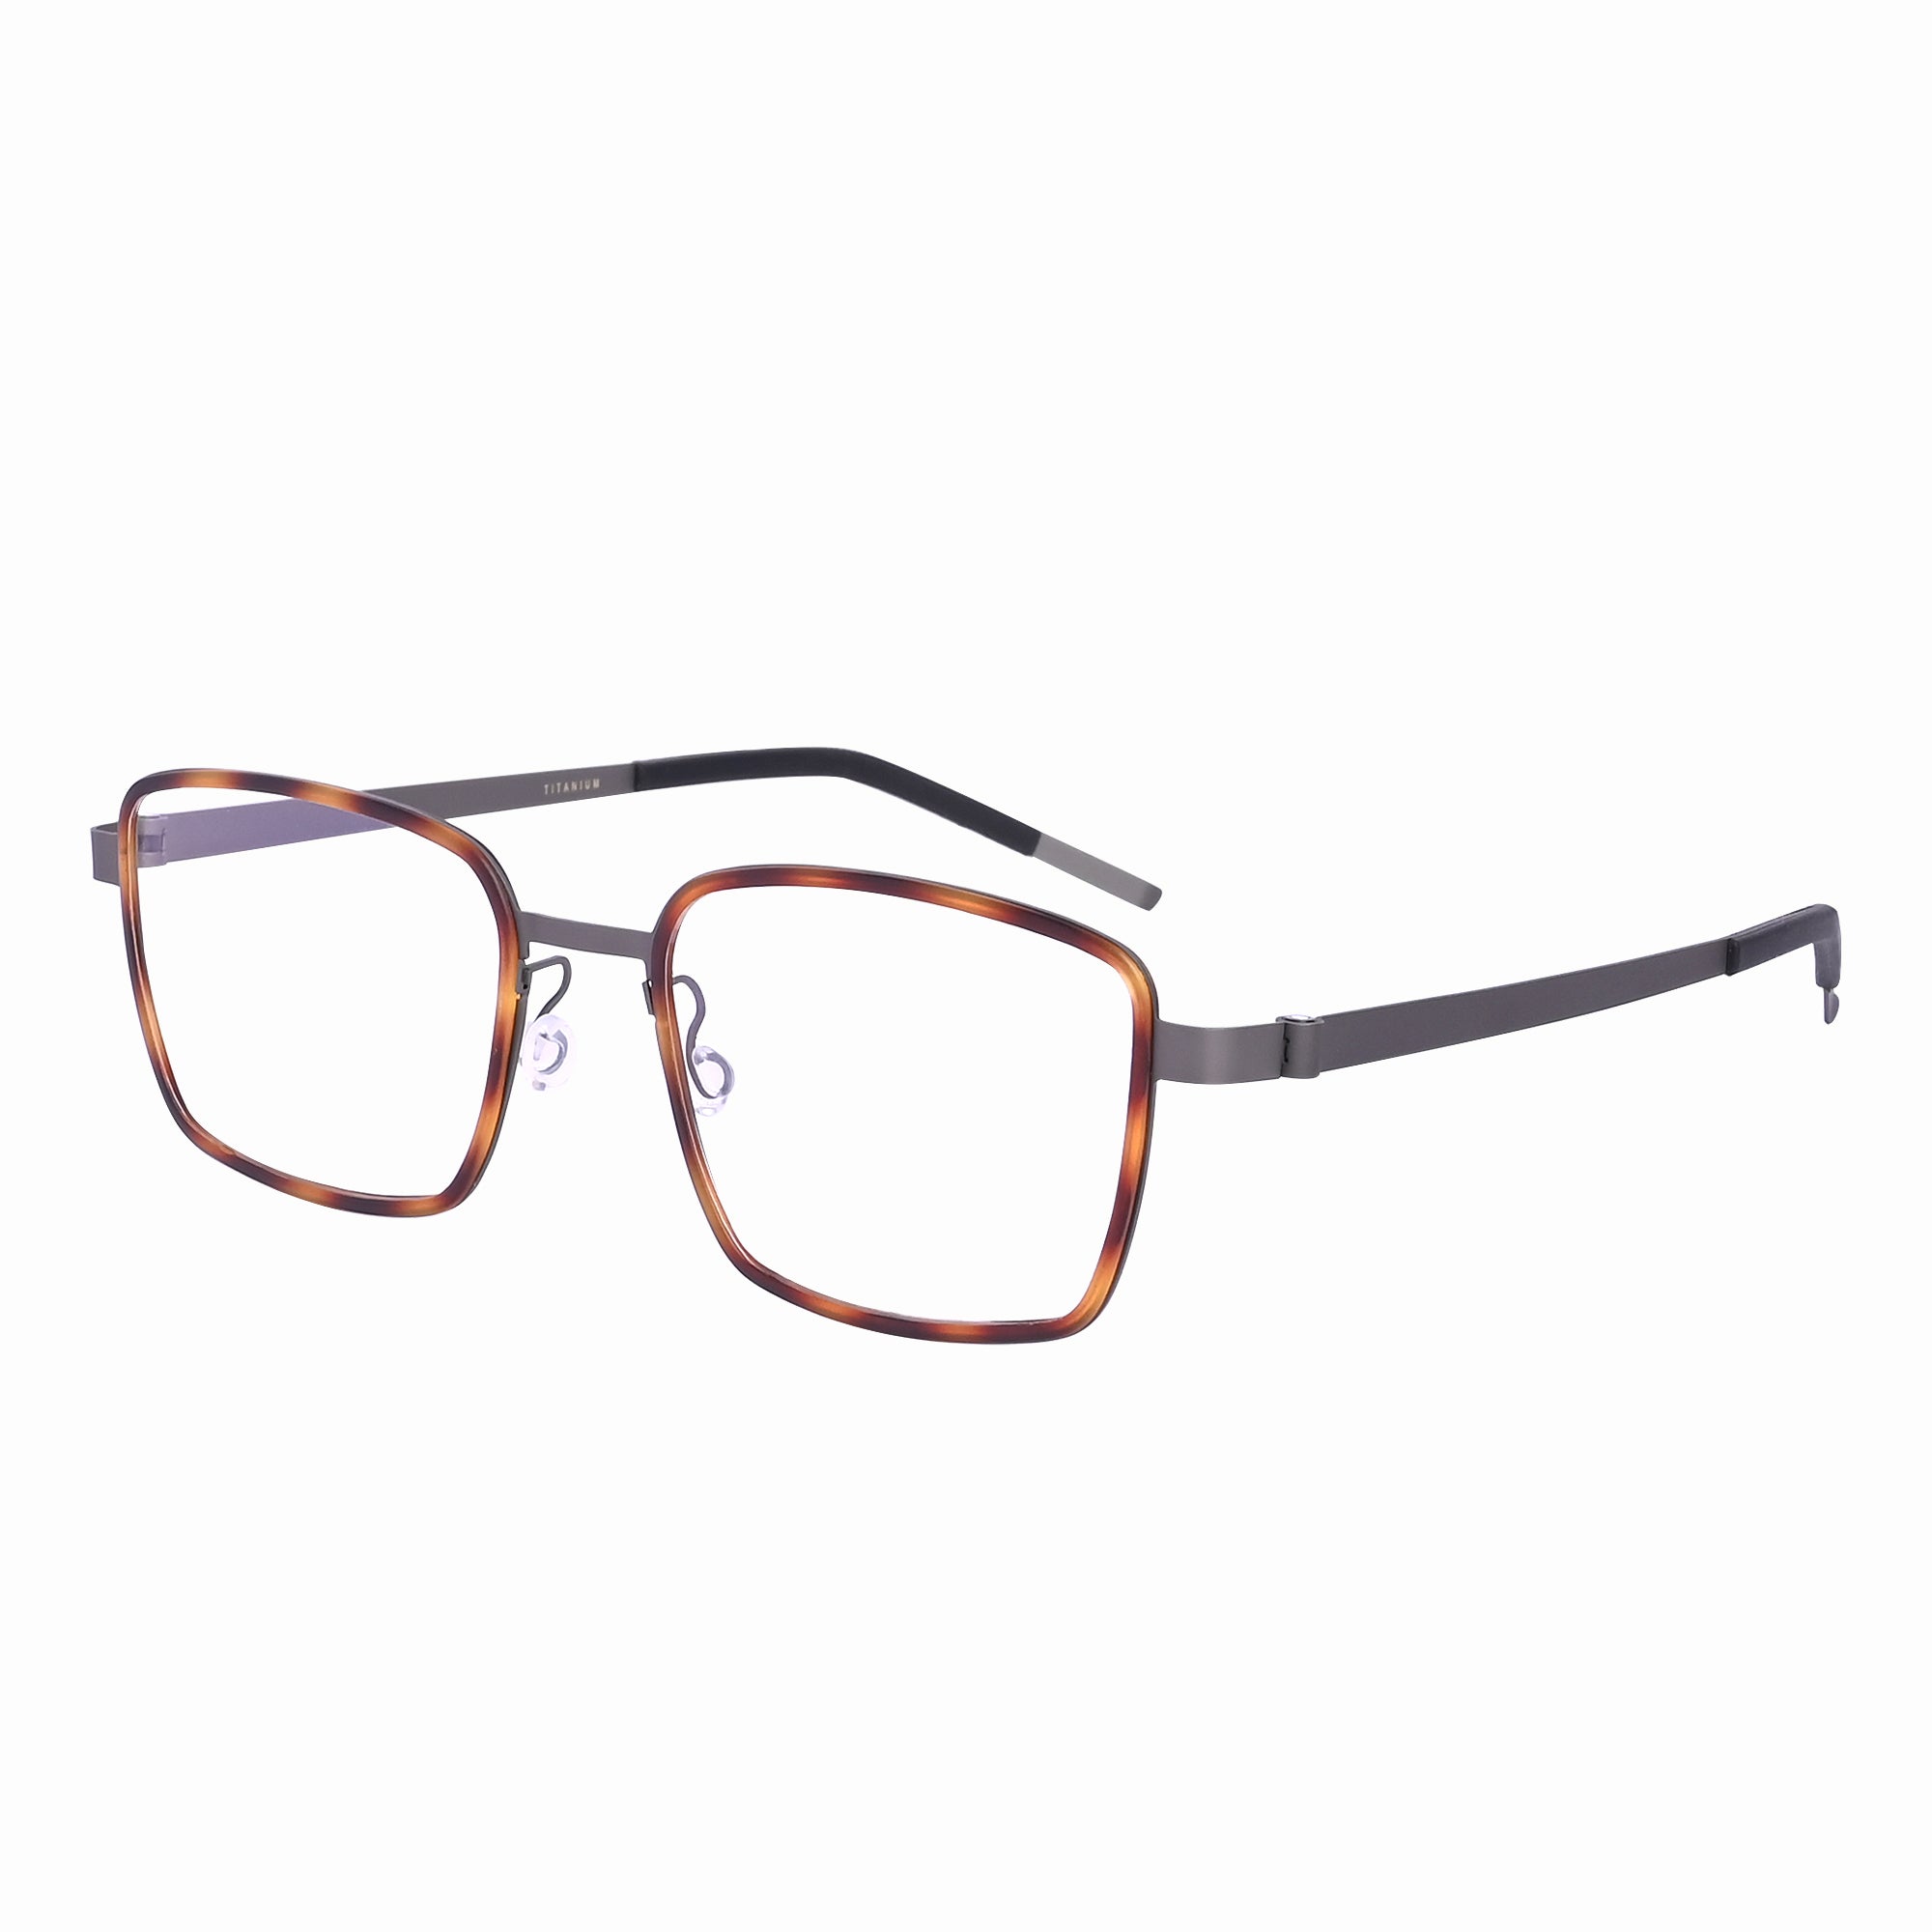 Grey Tortoise Square Keymount Titanium Glasses - LG-007 GRTT